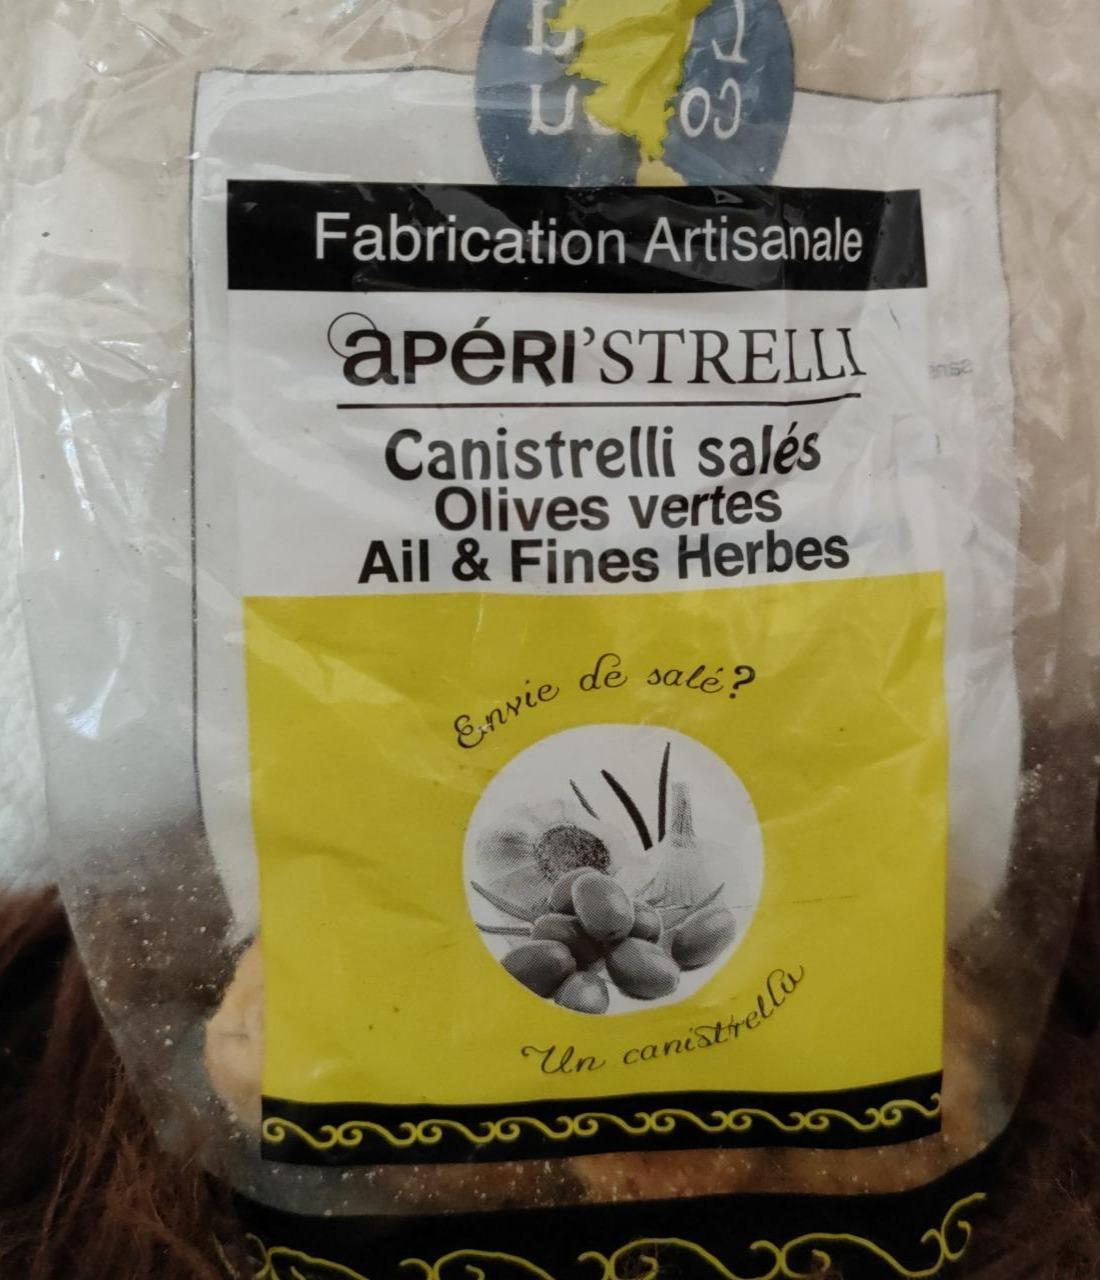 Fotografie - Aperi'strelli canistrelli salés olives vertes ail & fines herbes Fabrication Artisanale